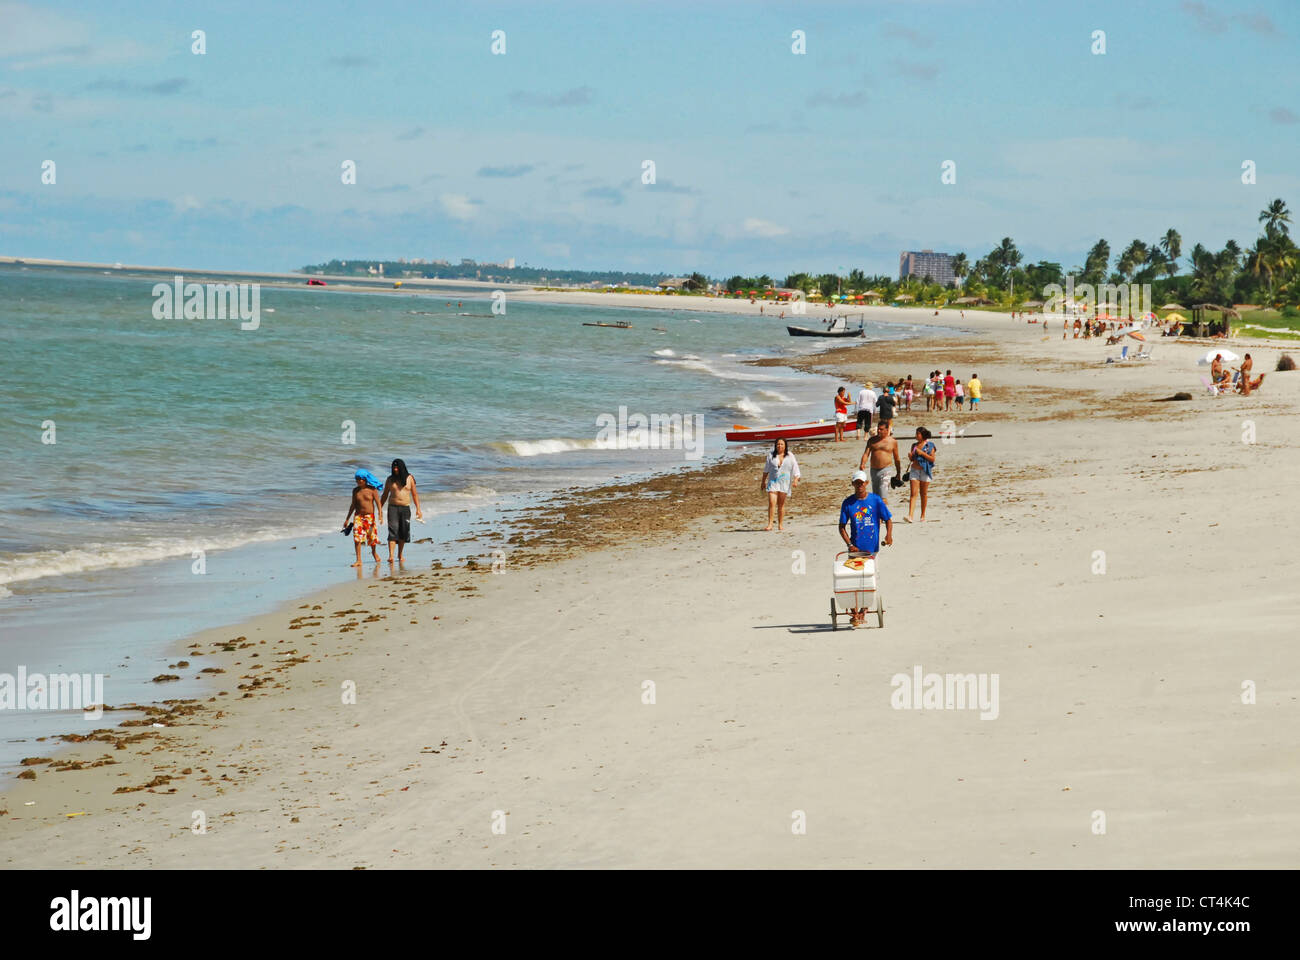 Brazil, Pernambuco, Ilha de Itamaraca, people walking on the beach Stock Photo